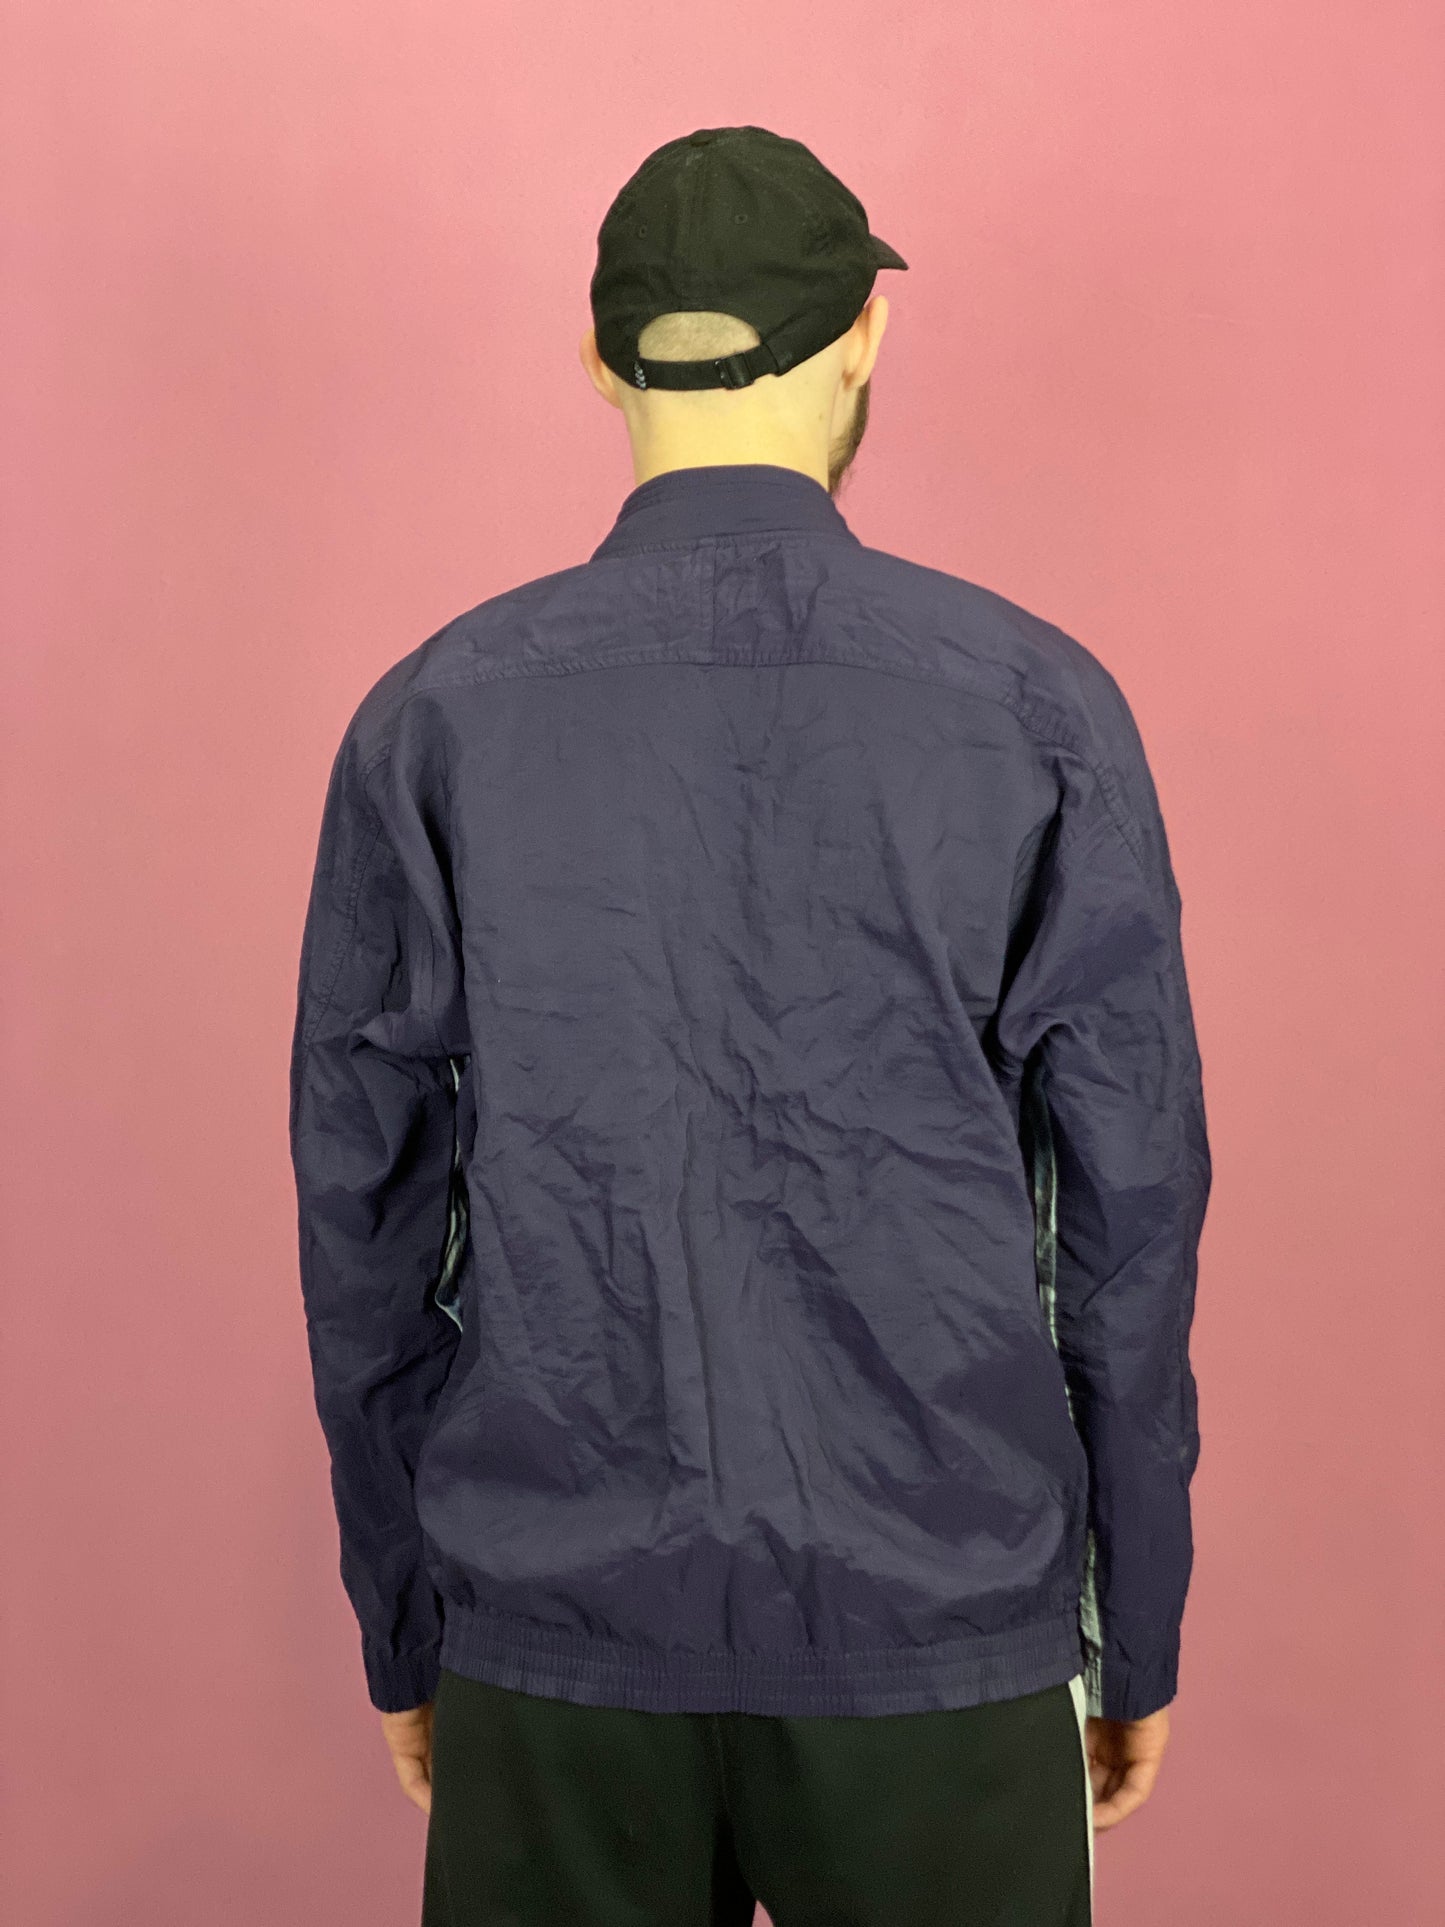 90s Benger Vintage Men's Windbreaker Jacket - Large Navy Blue Nylon